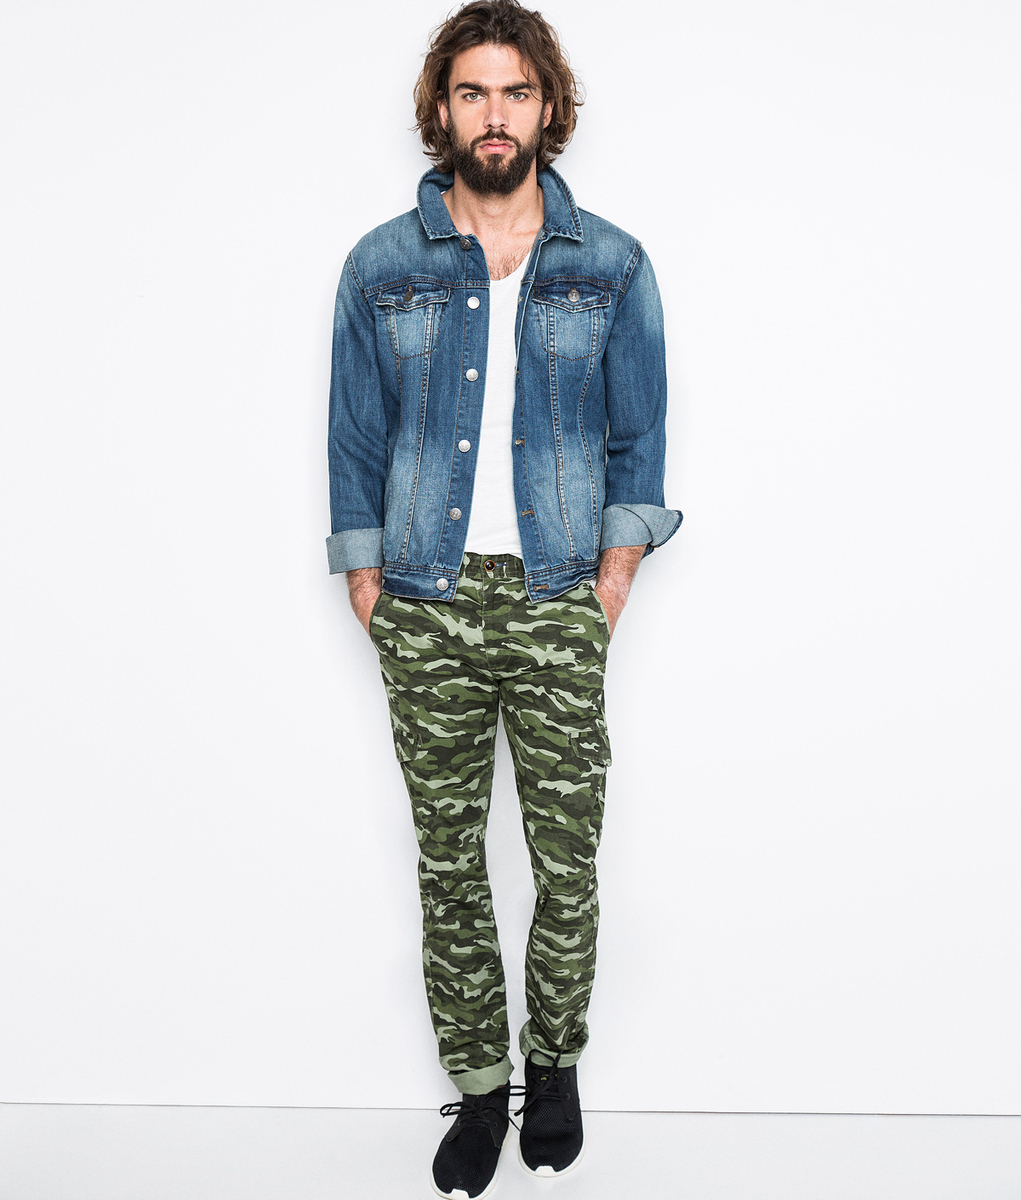 Springfield camouflage szűkszárú férfi nadrág 2015.02.28 fotója